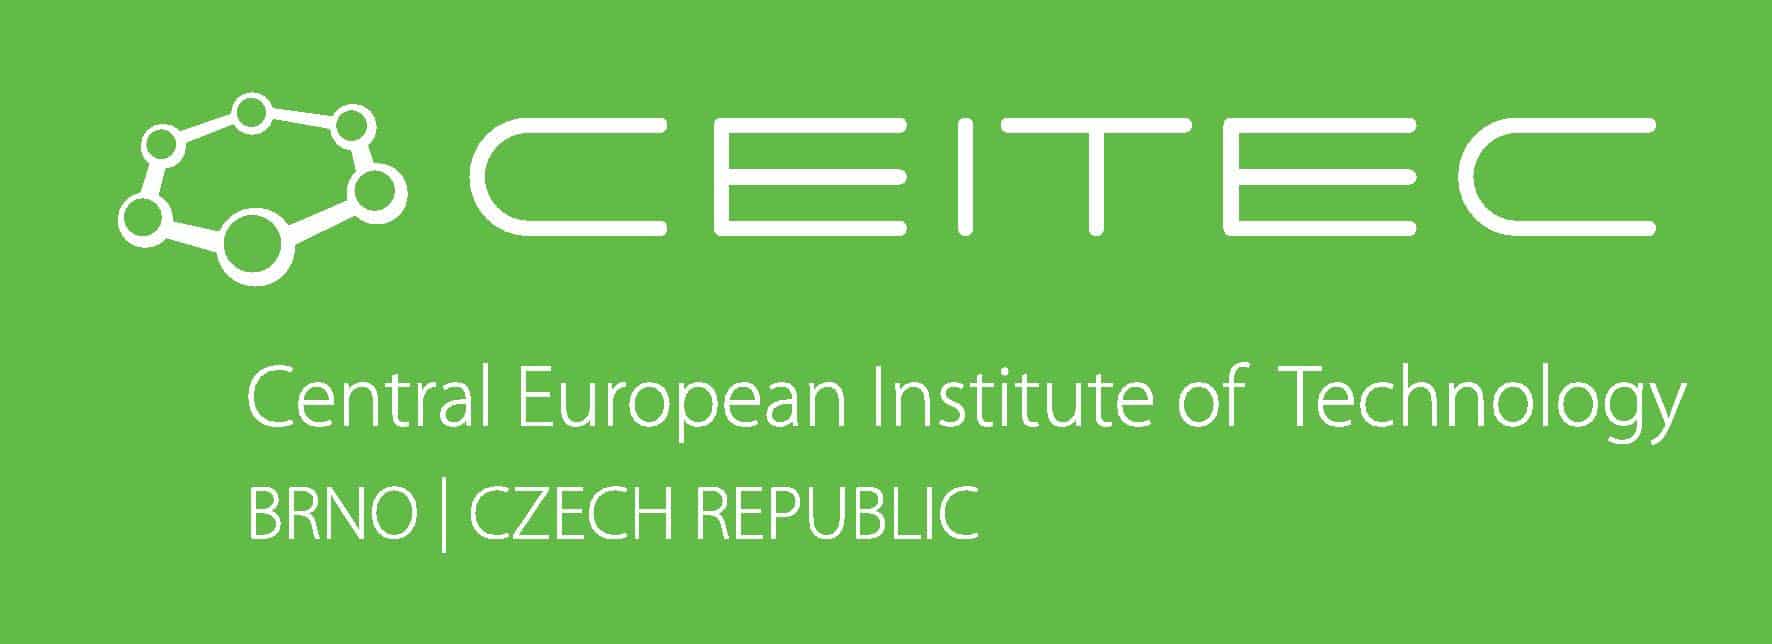 CEITEC_logo